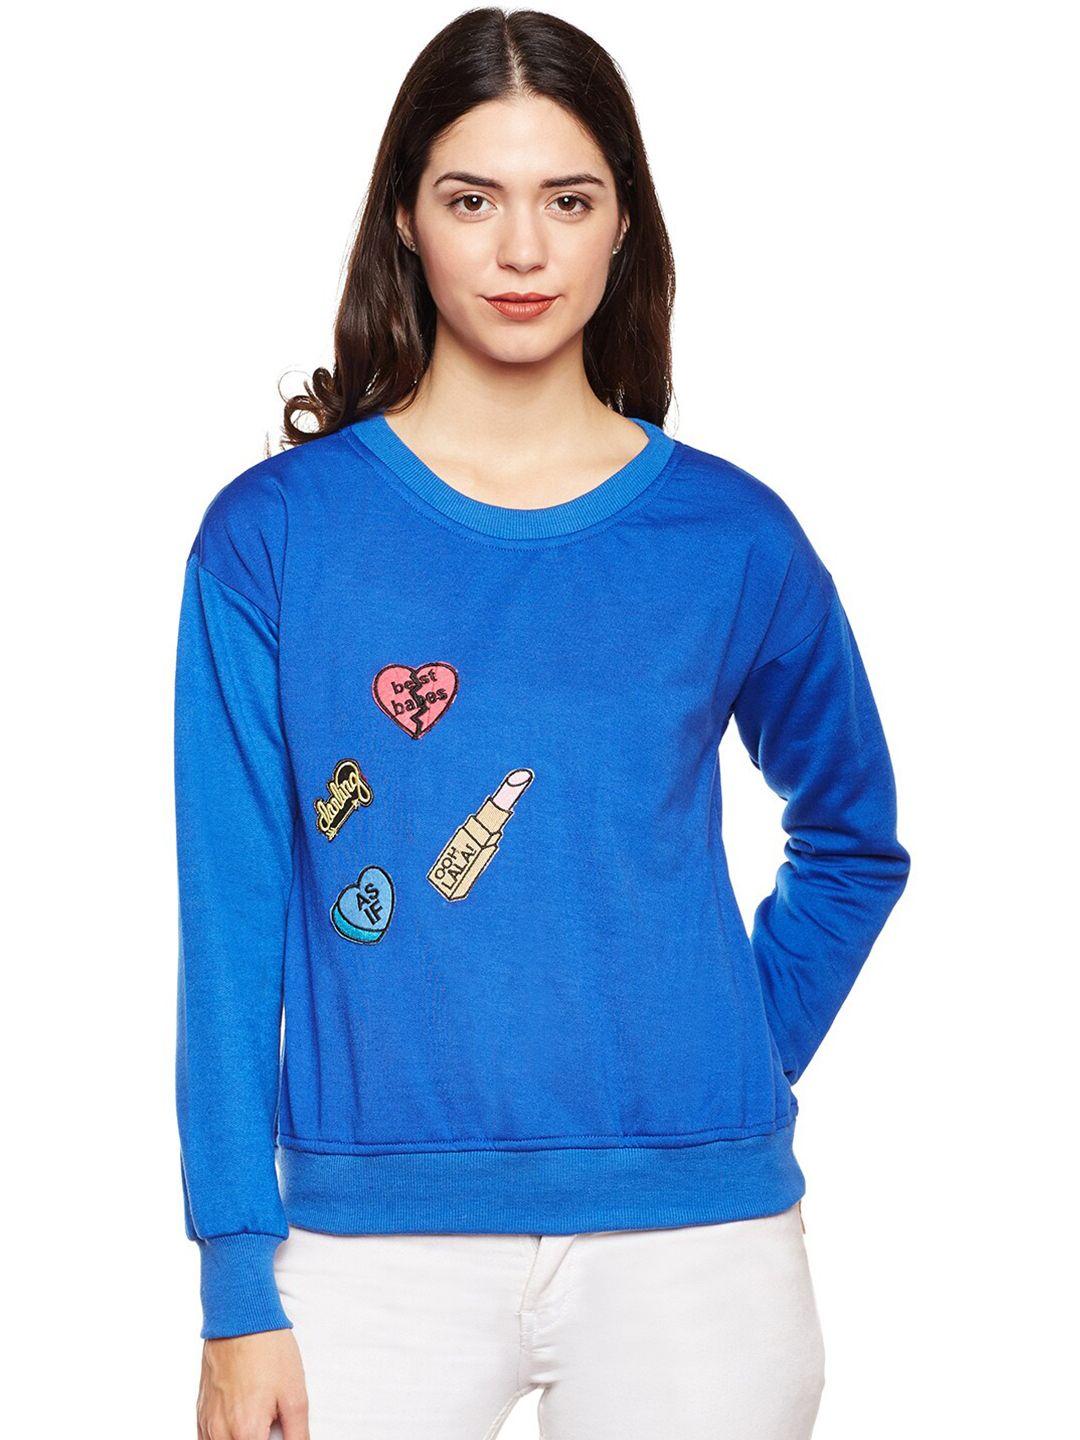 baesd conversational embroidered pullover fleece sweatshirt